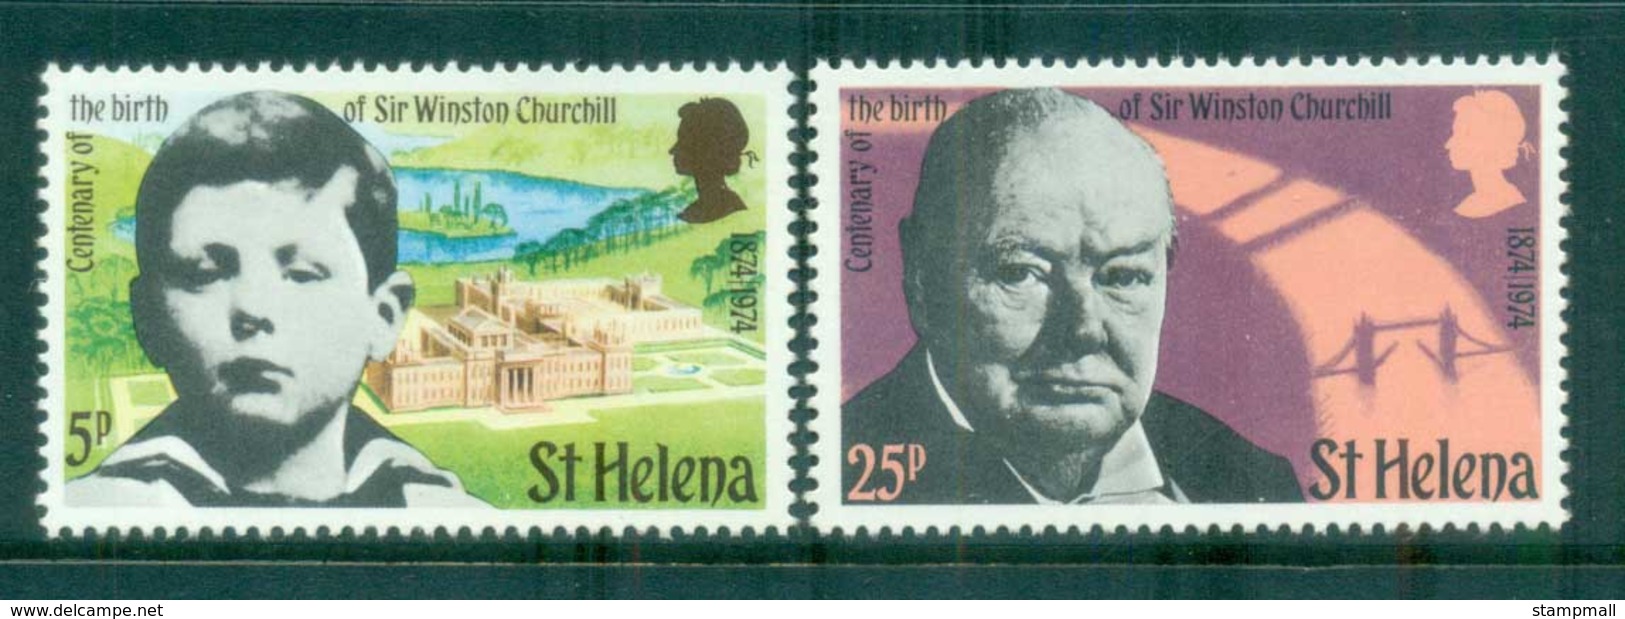 St Helena 1974 Winston Churchill MUH - Saint Helena Island